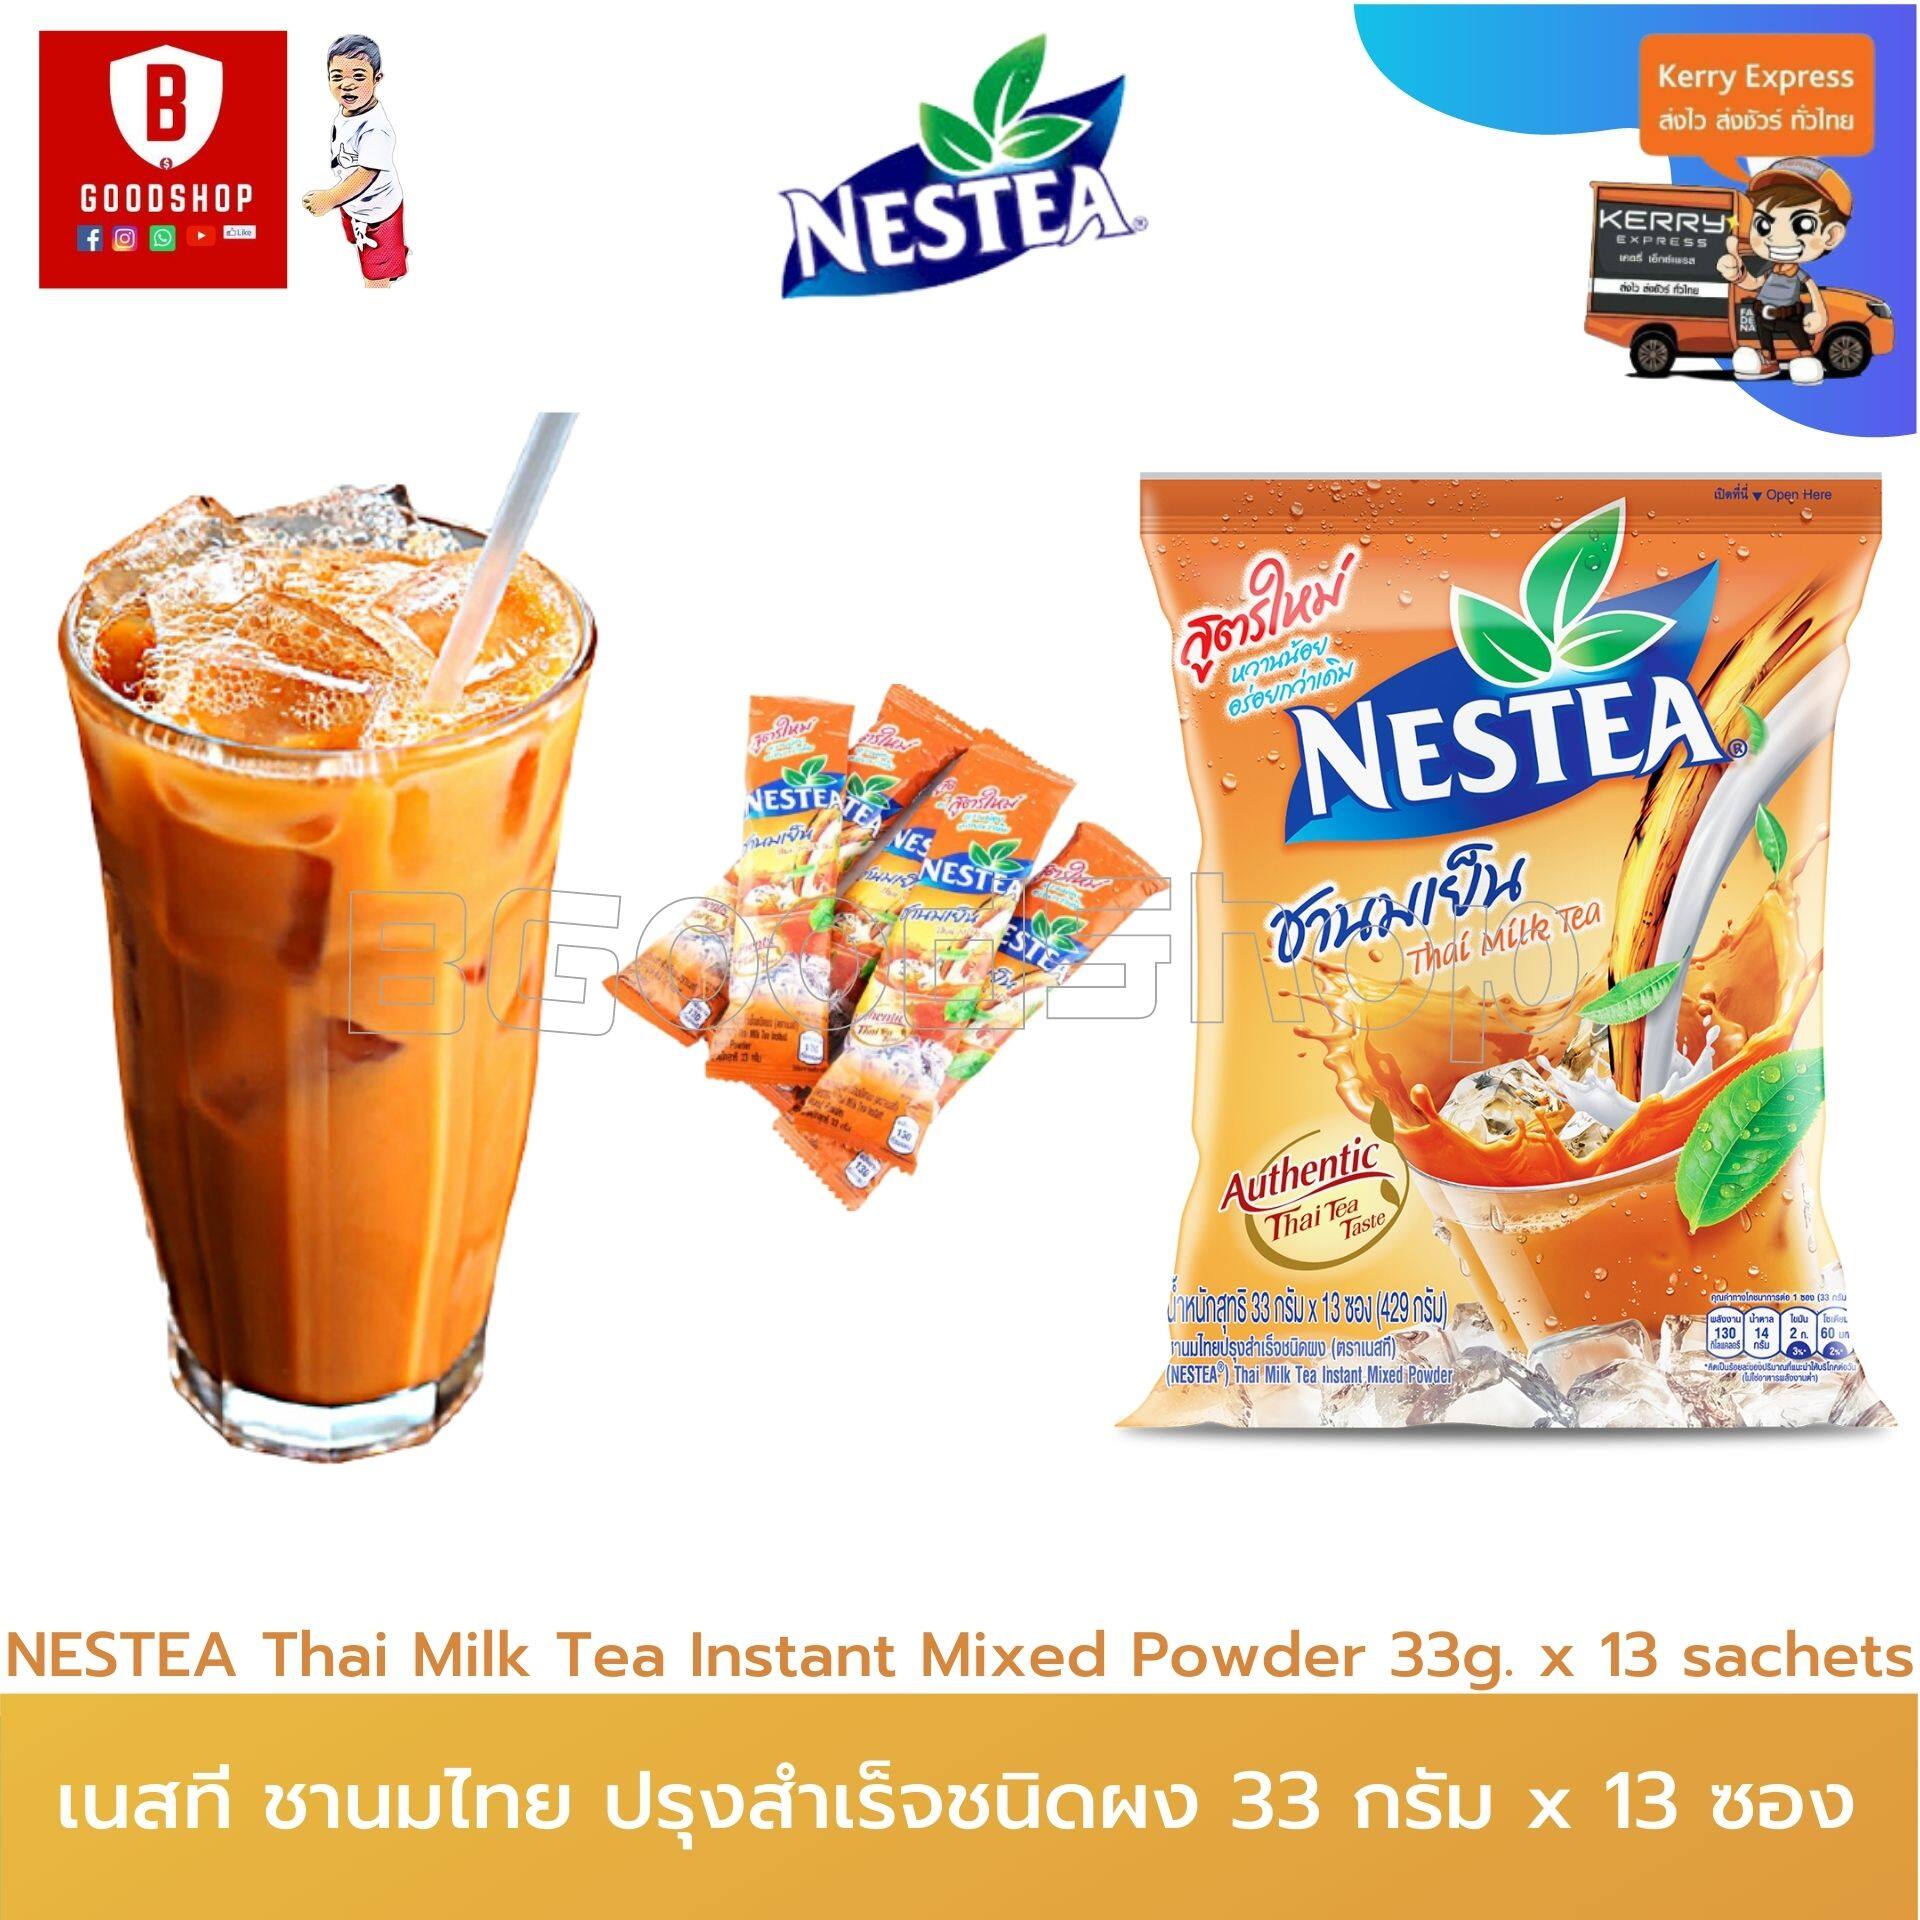 NESTEA เนสที ชานมไทย ชาไทยสำเร็จรูปชนิดผง ขนาด 33 กรัม x 13 ซอง ชานมเย็น ชาเย็น แคลเซียมสูง กลิ่นหอมลงตัวจากชาและนม หวานกำลังดี สดชื่น ชุ่มคอ